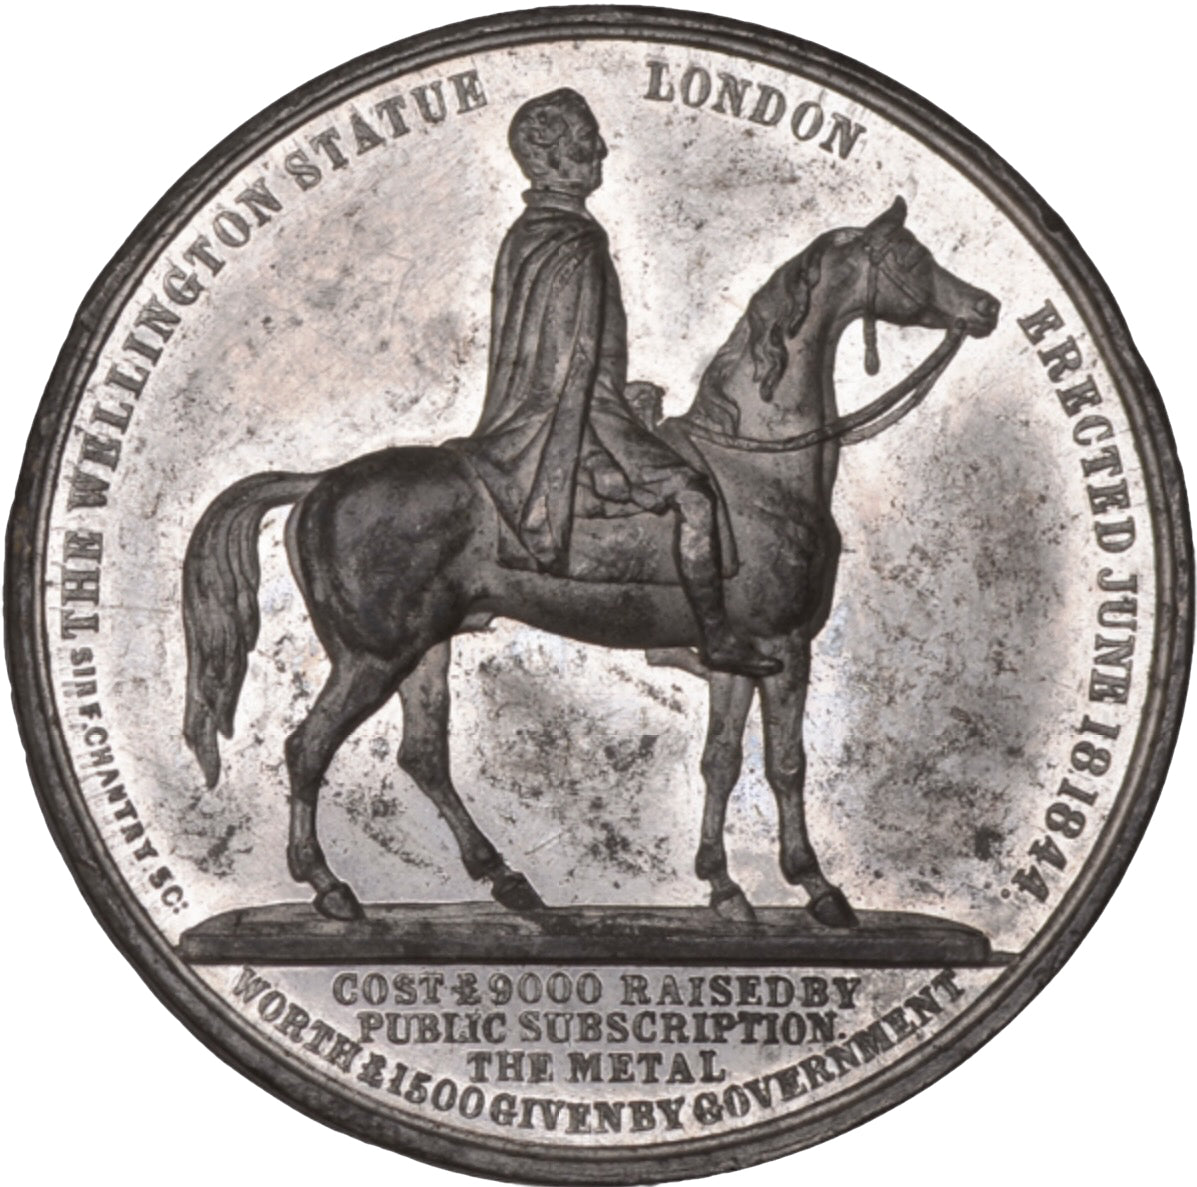 1844 Duke of Wellington, Equestrian statue 39mm white metal medal BHM 2191 E1387